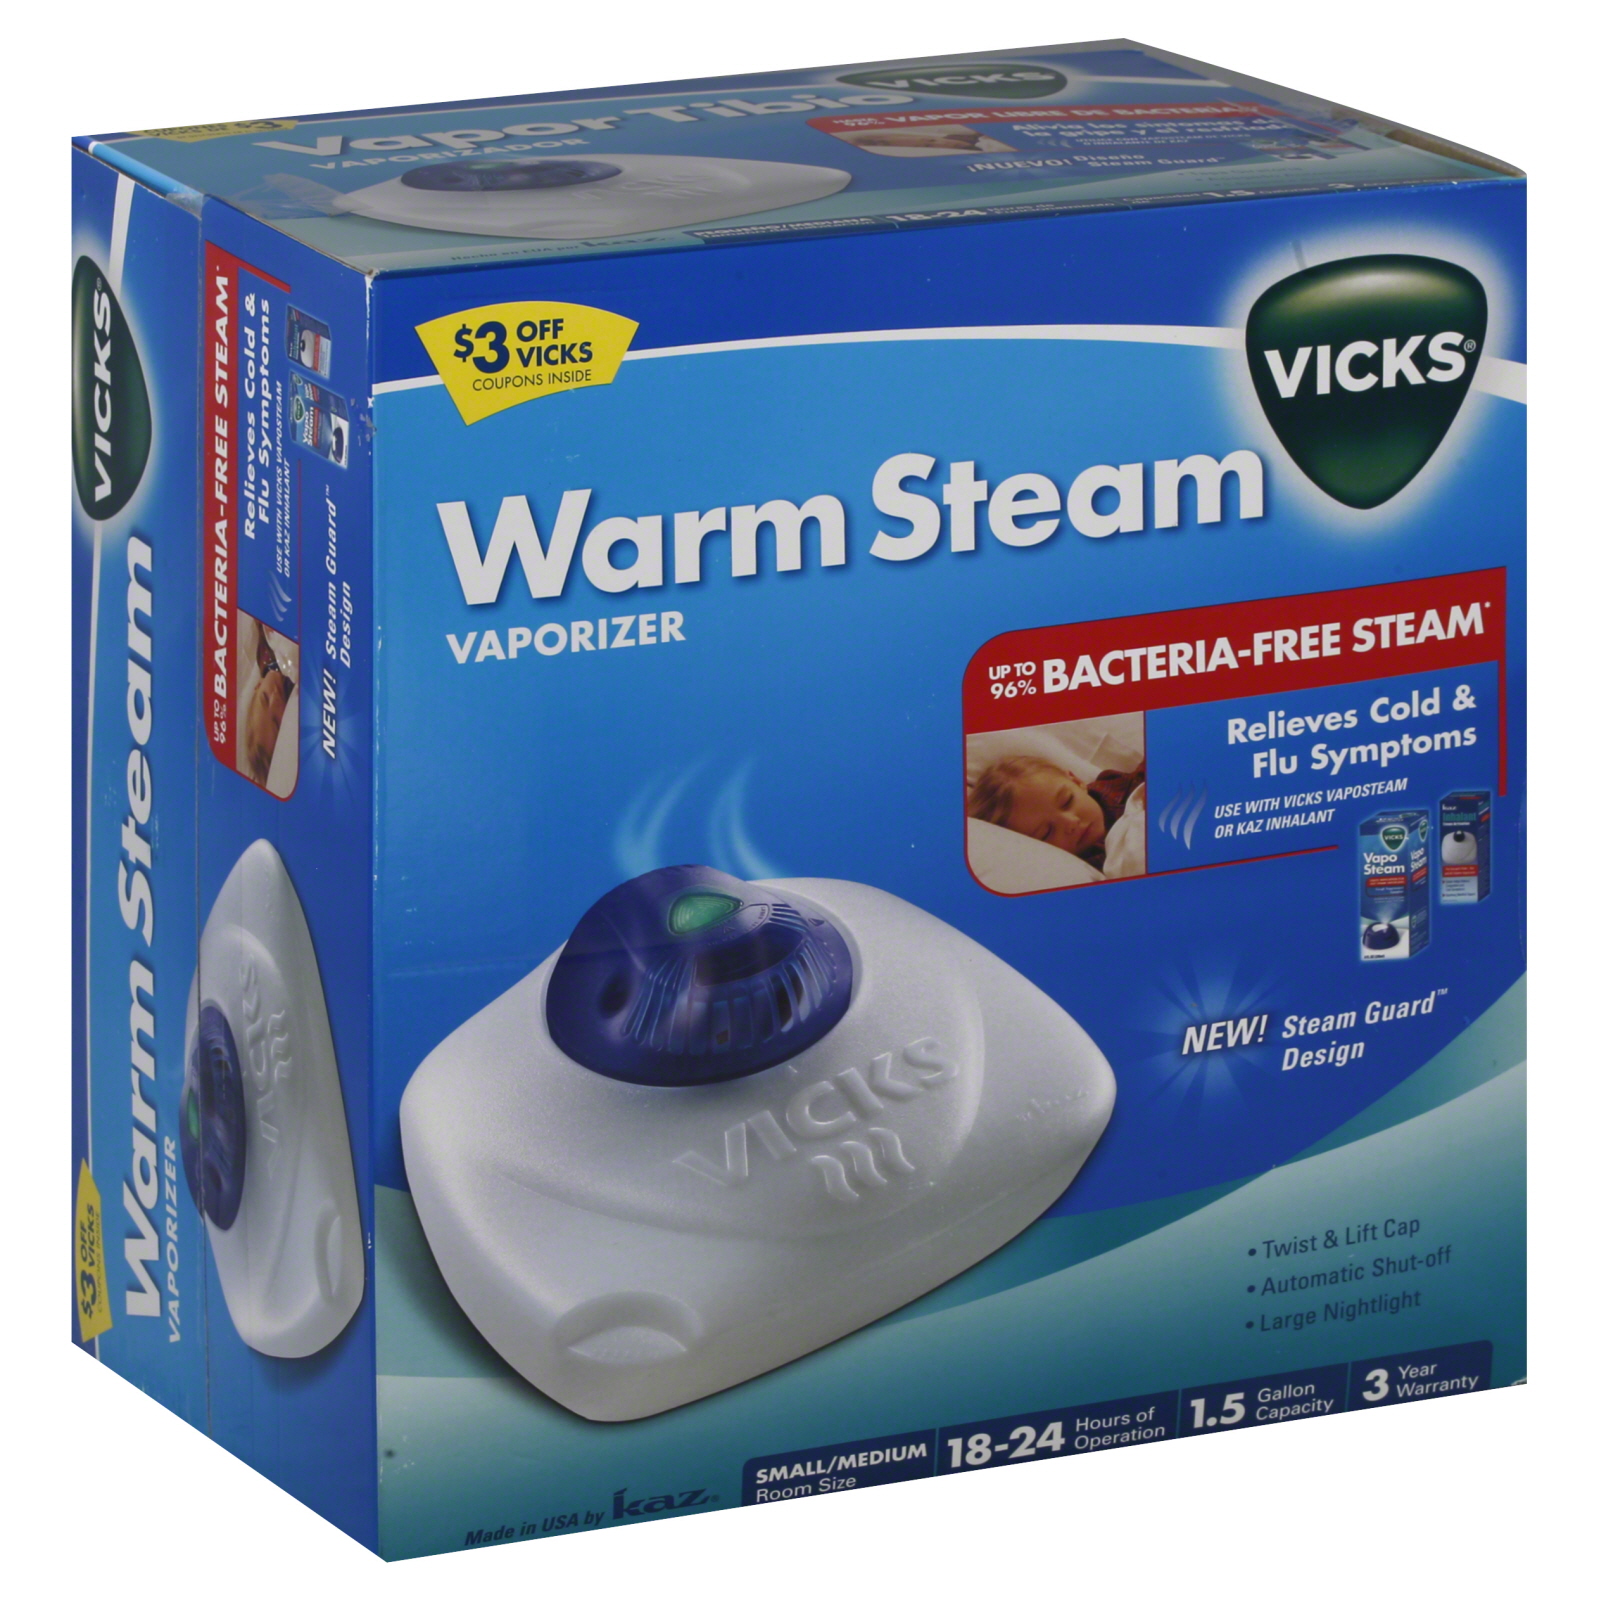 Vicks 68325011 Vaporizer, Warm Steam, 1 vaporizer